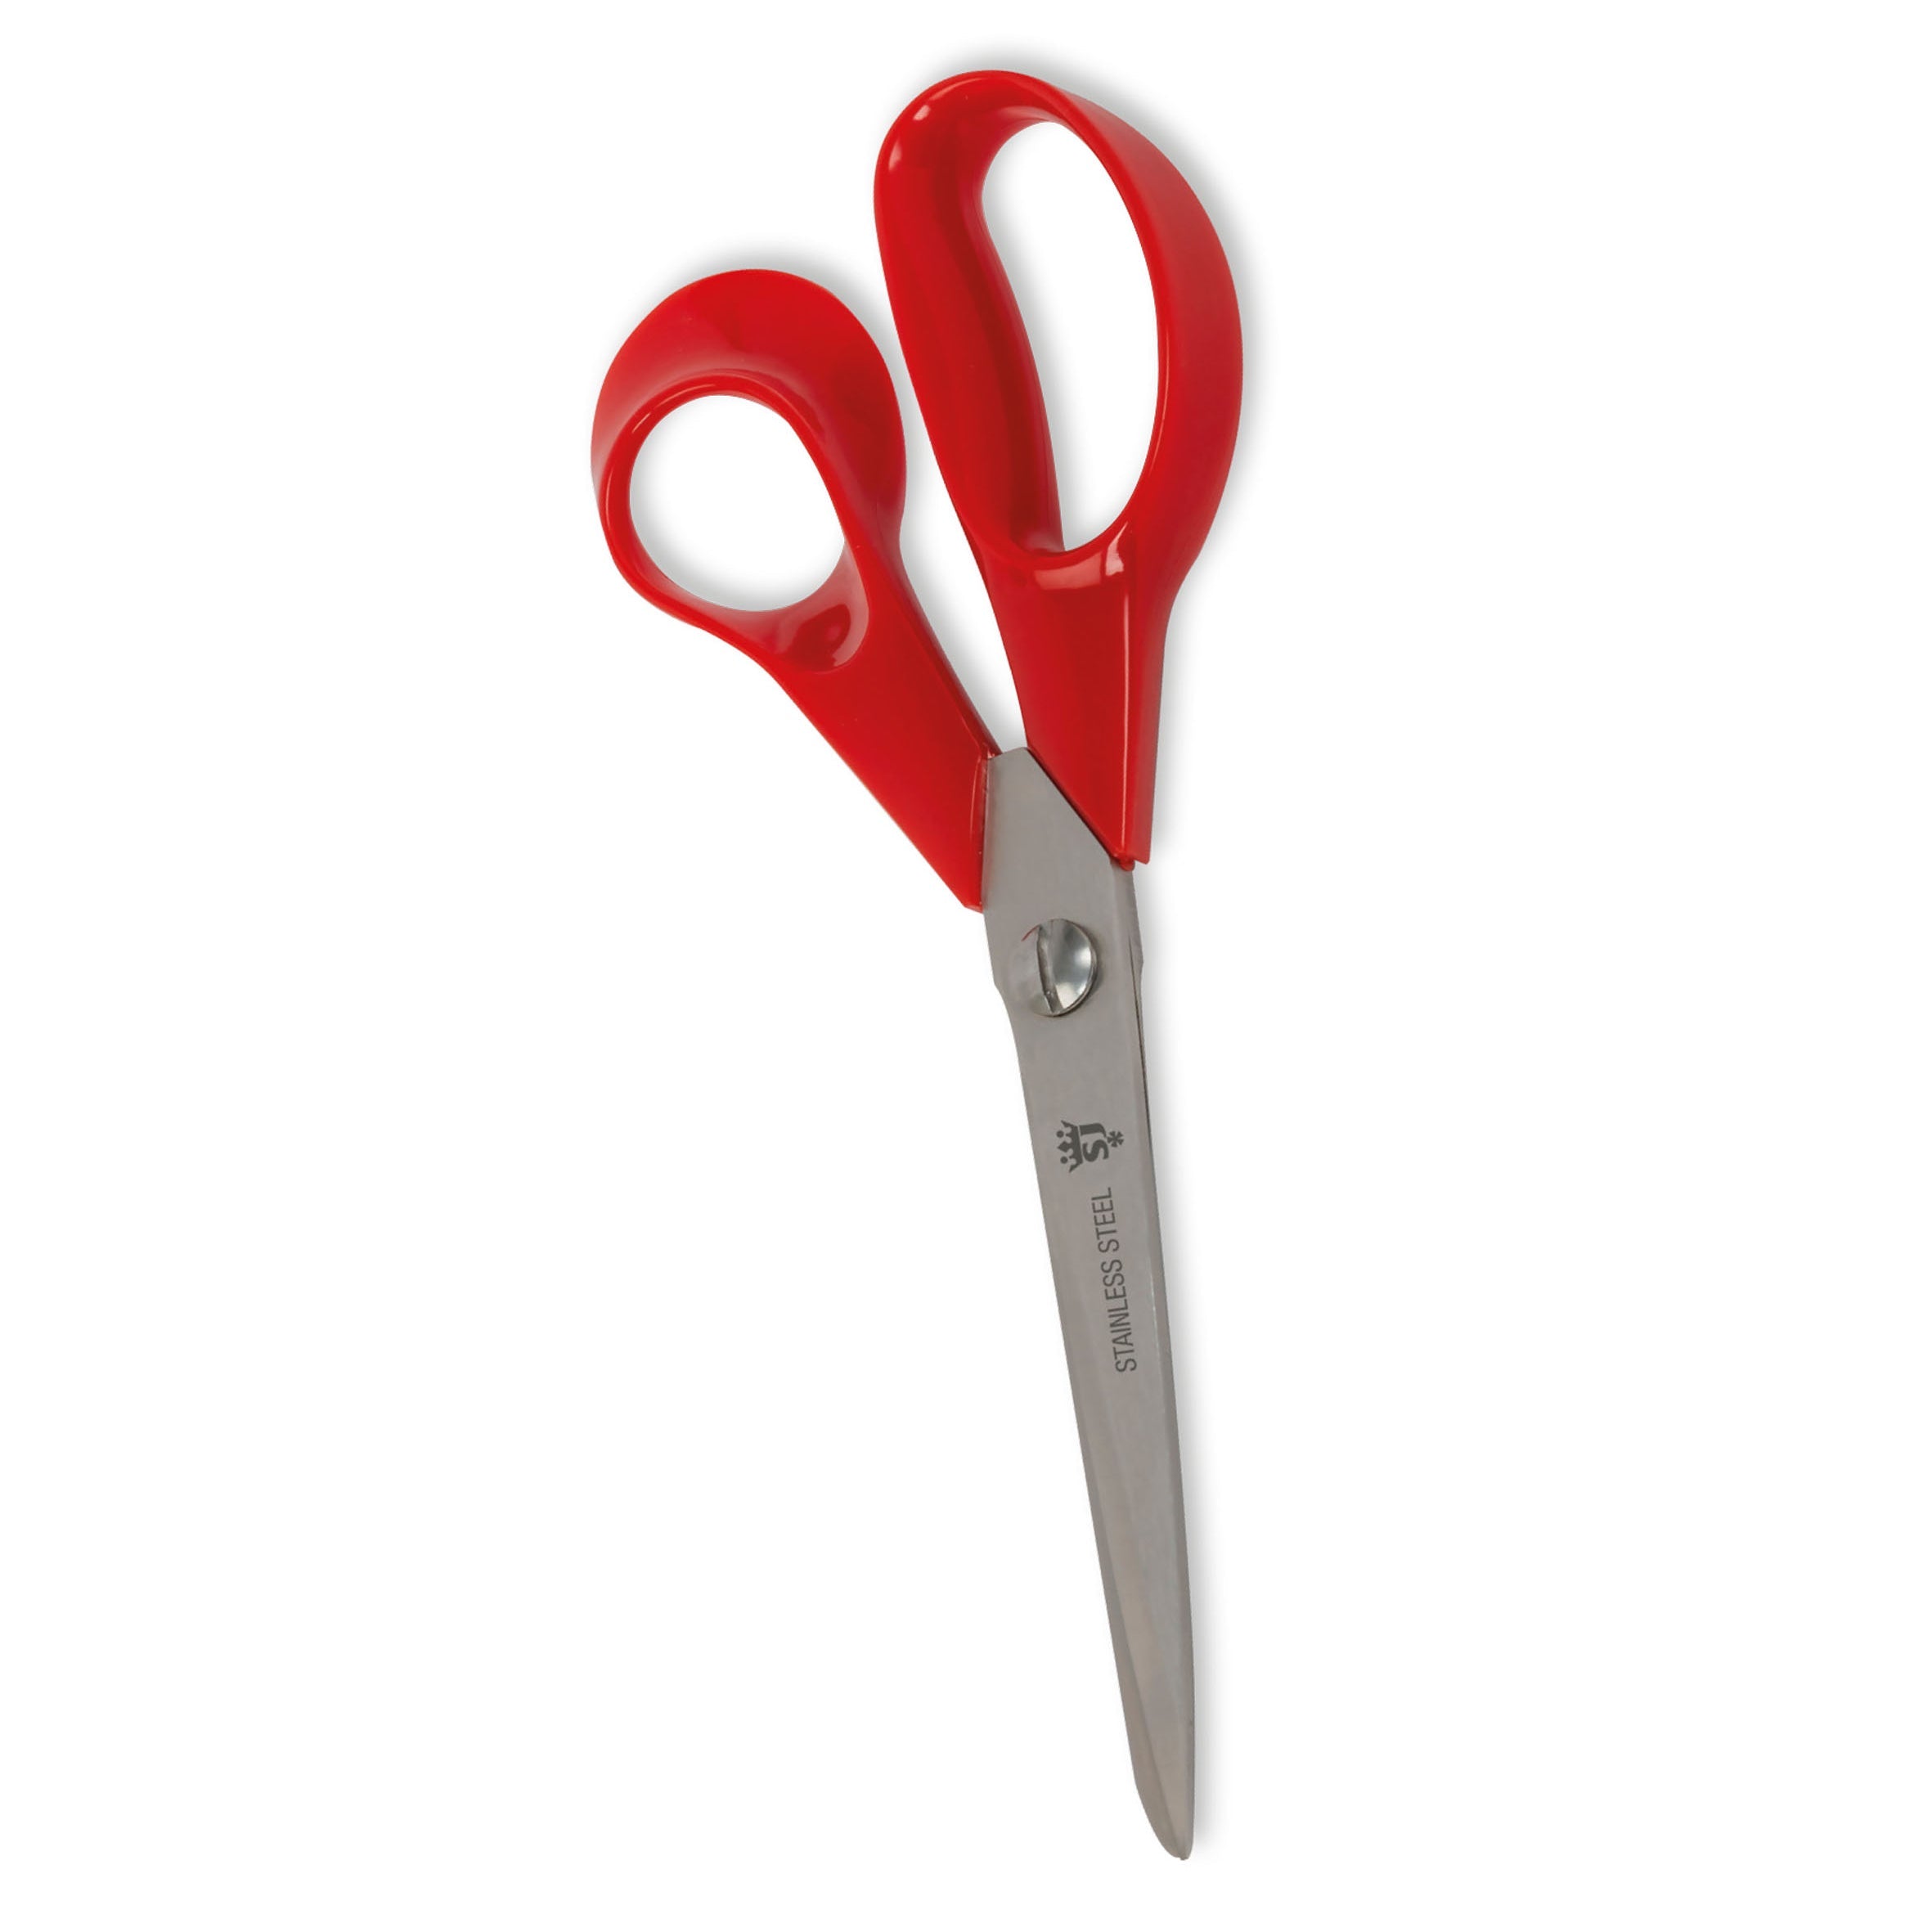 Spear & Jackson 4652 AS Scissors All Purpose 8" - Premium Scissors from ChefAid - Just $6.00! Shop now at W Hurst & Son (IW) Ltd